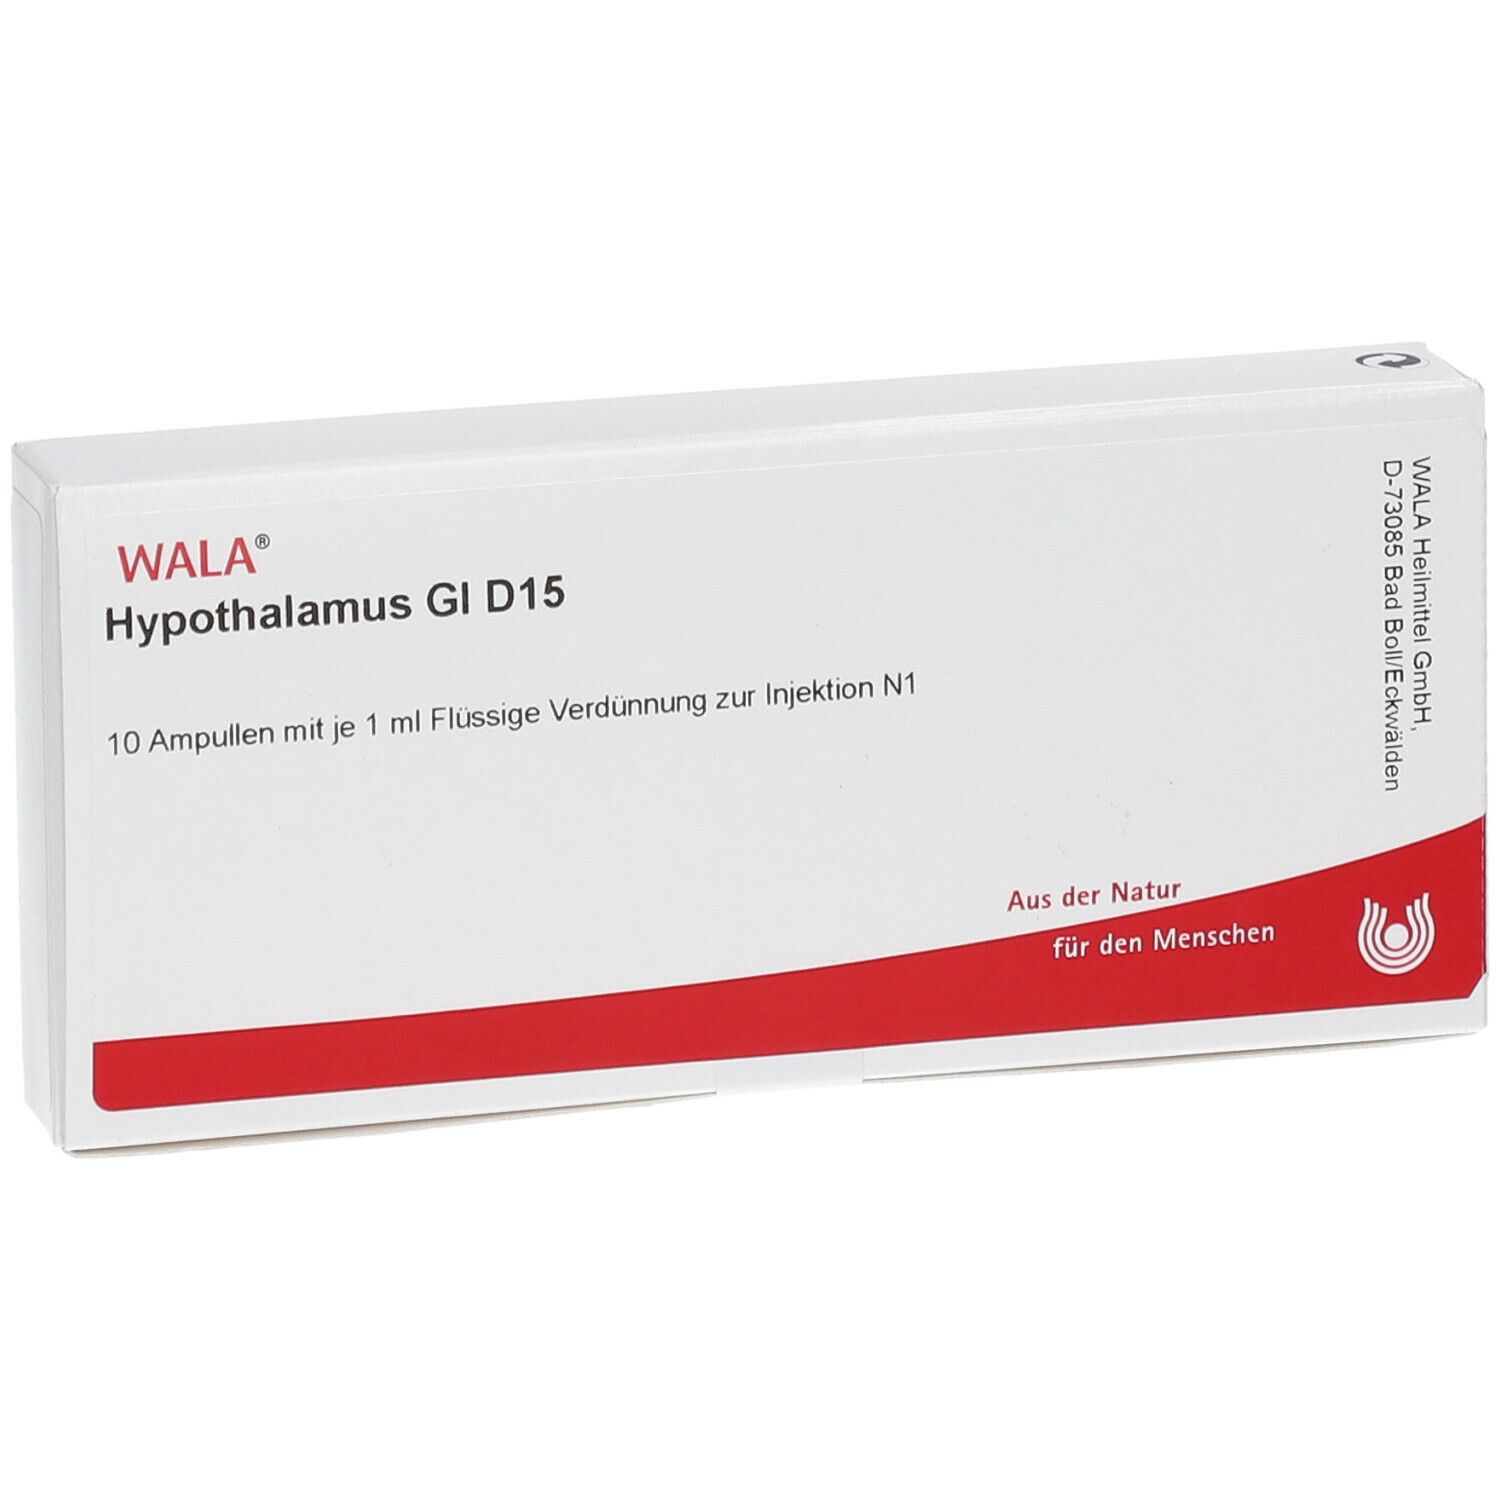 WALA® Hypothalamus Gl D 15